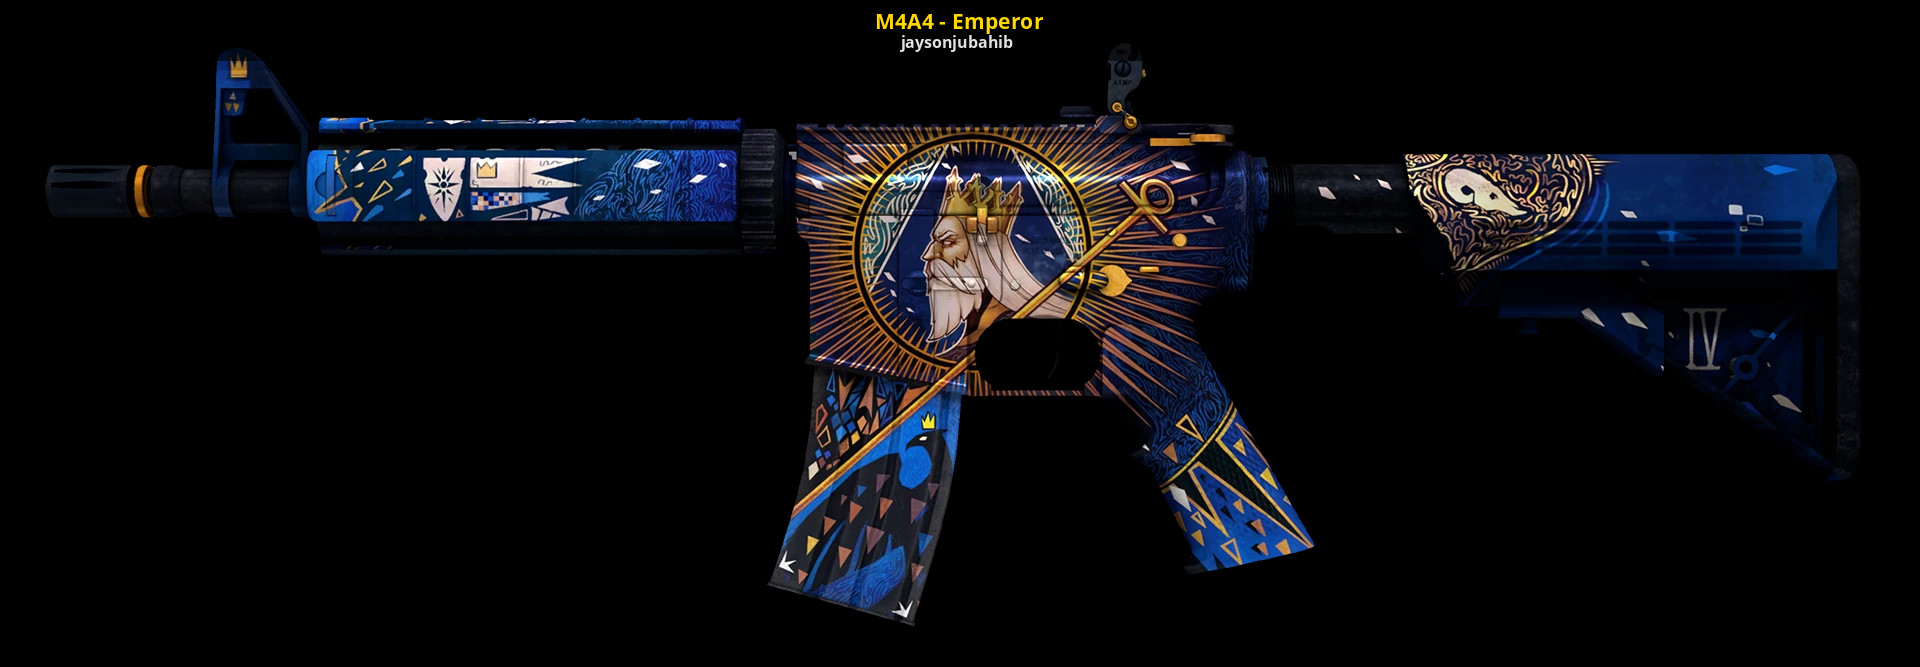 M4a4 император фото 11